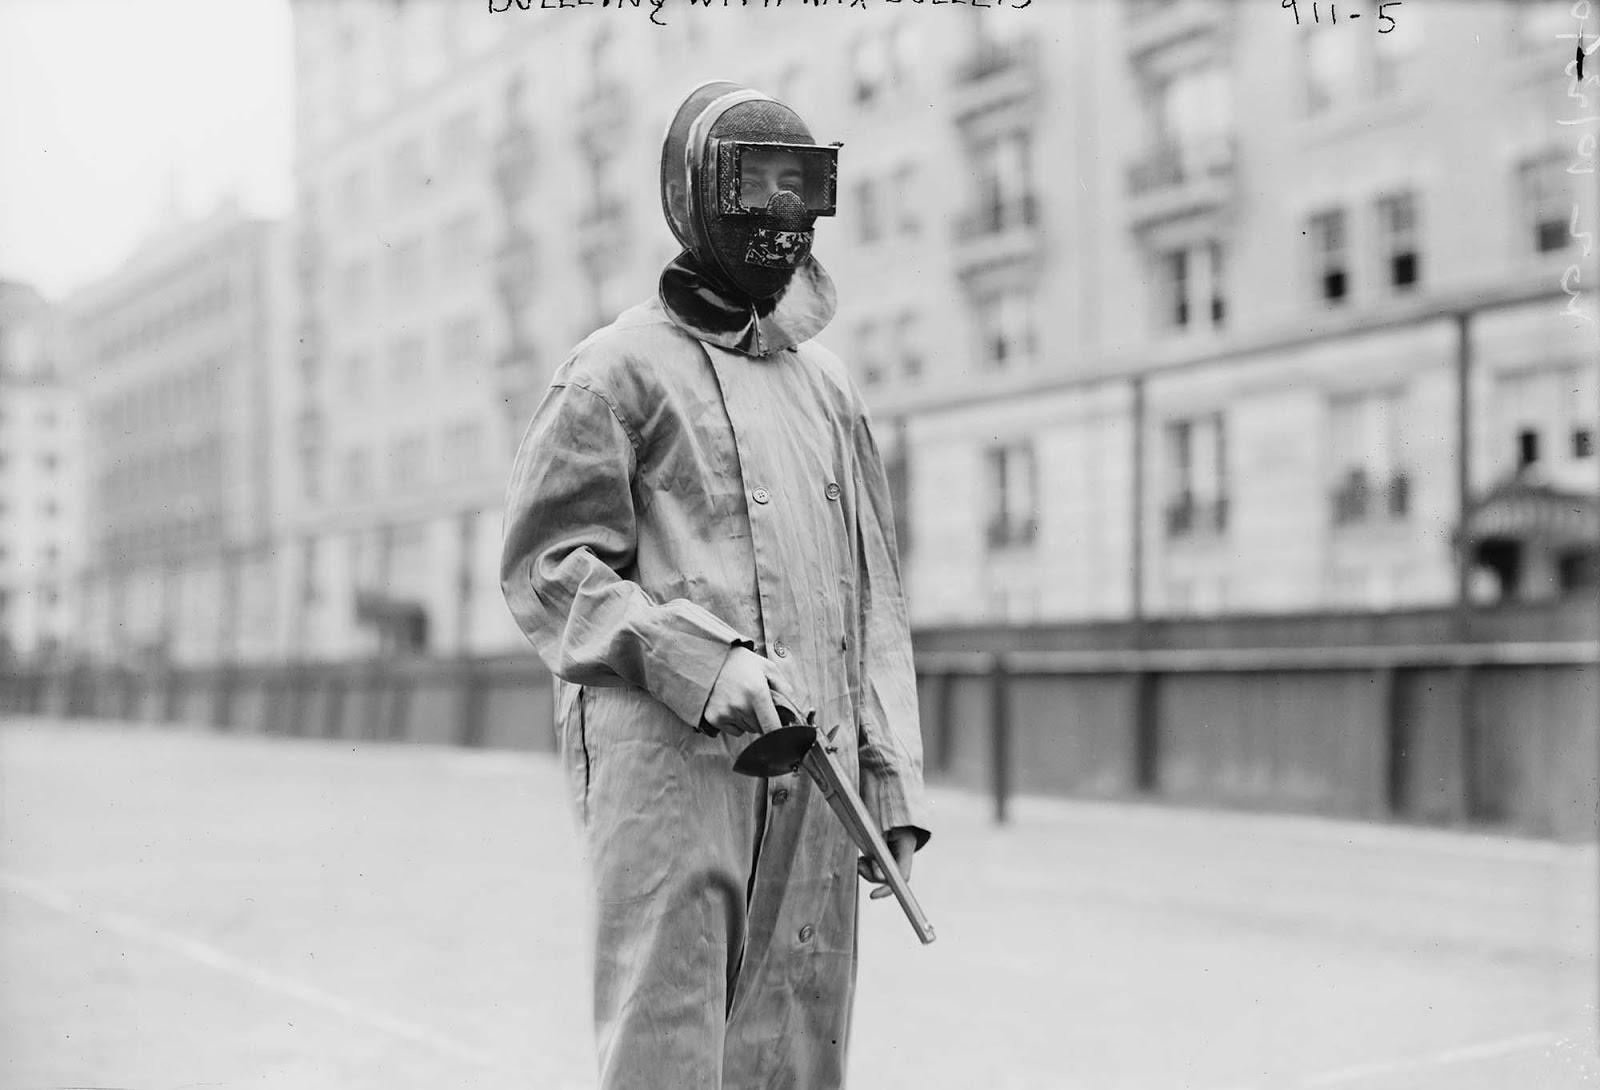 Duel avec de la cire de balles, 1909